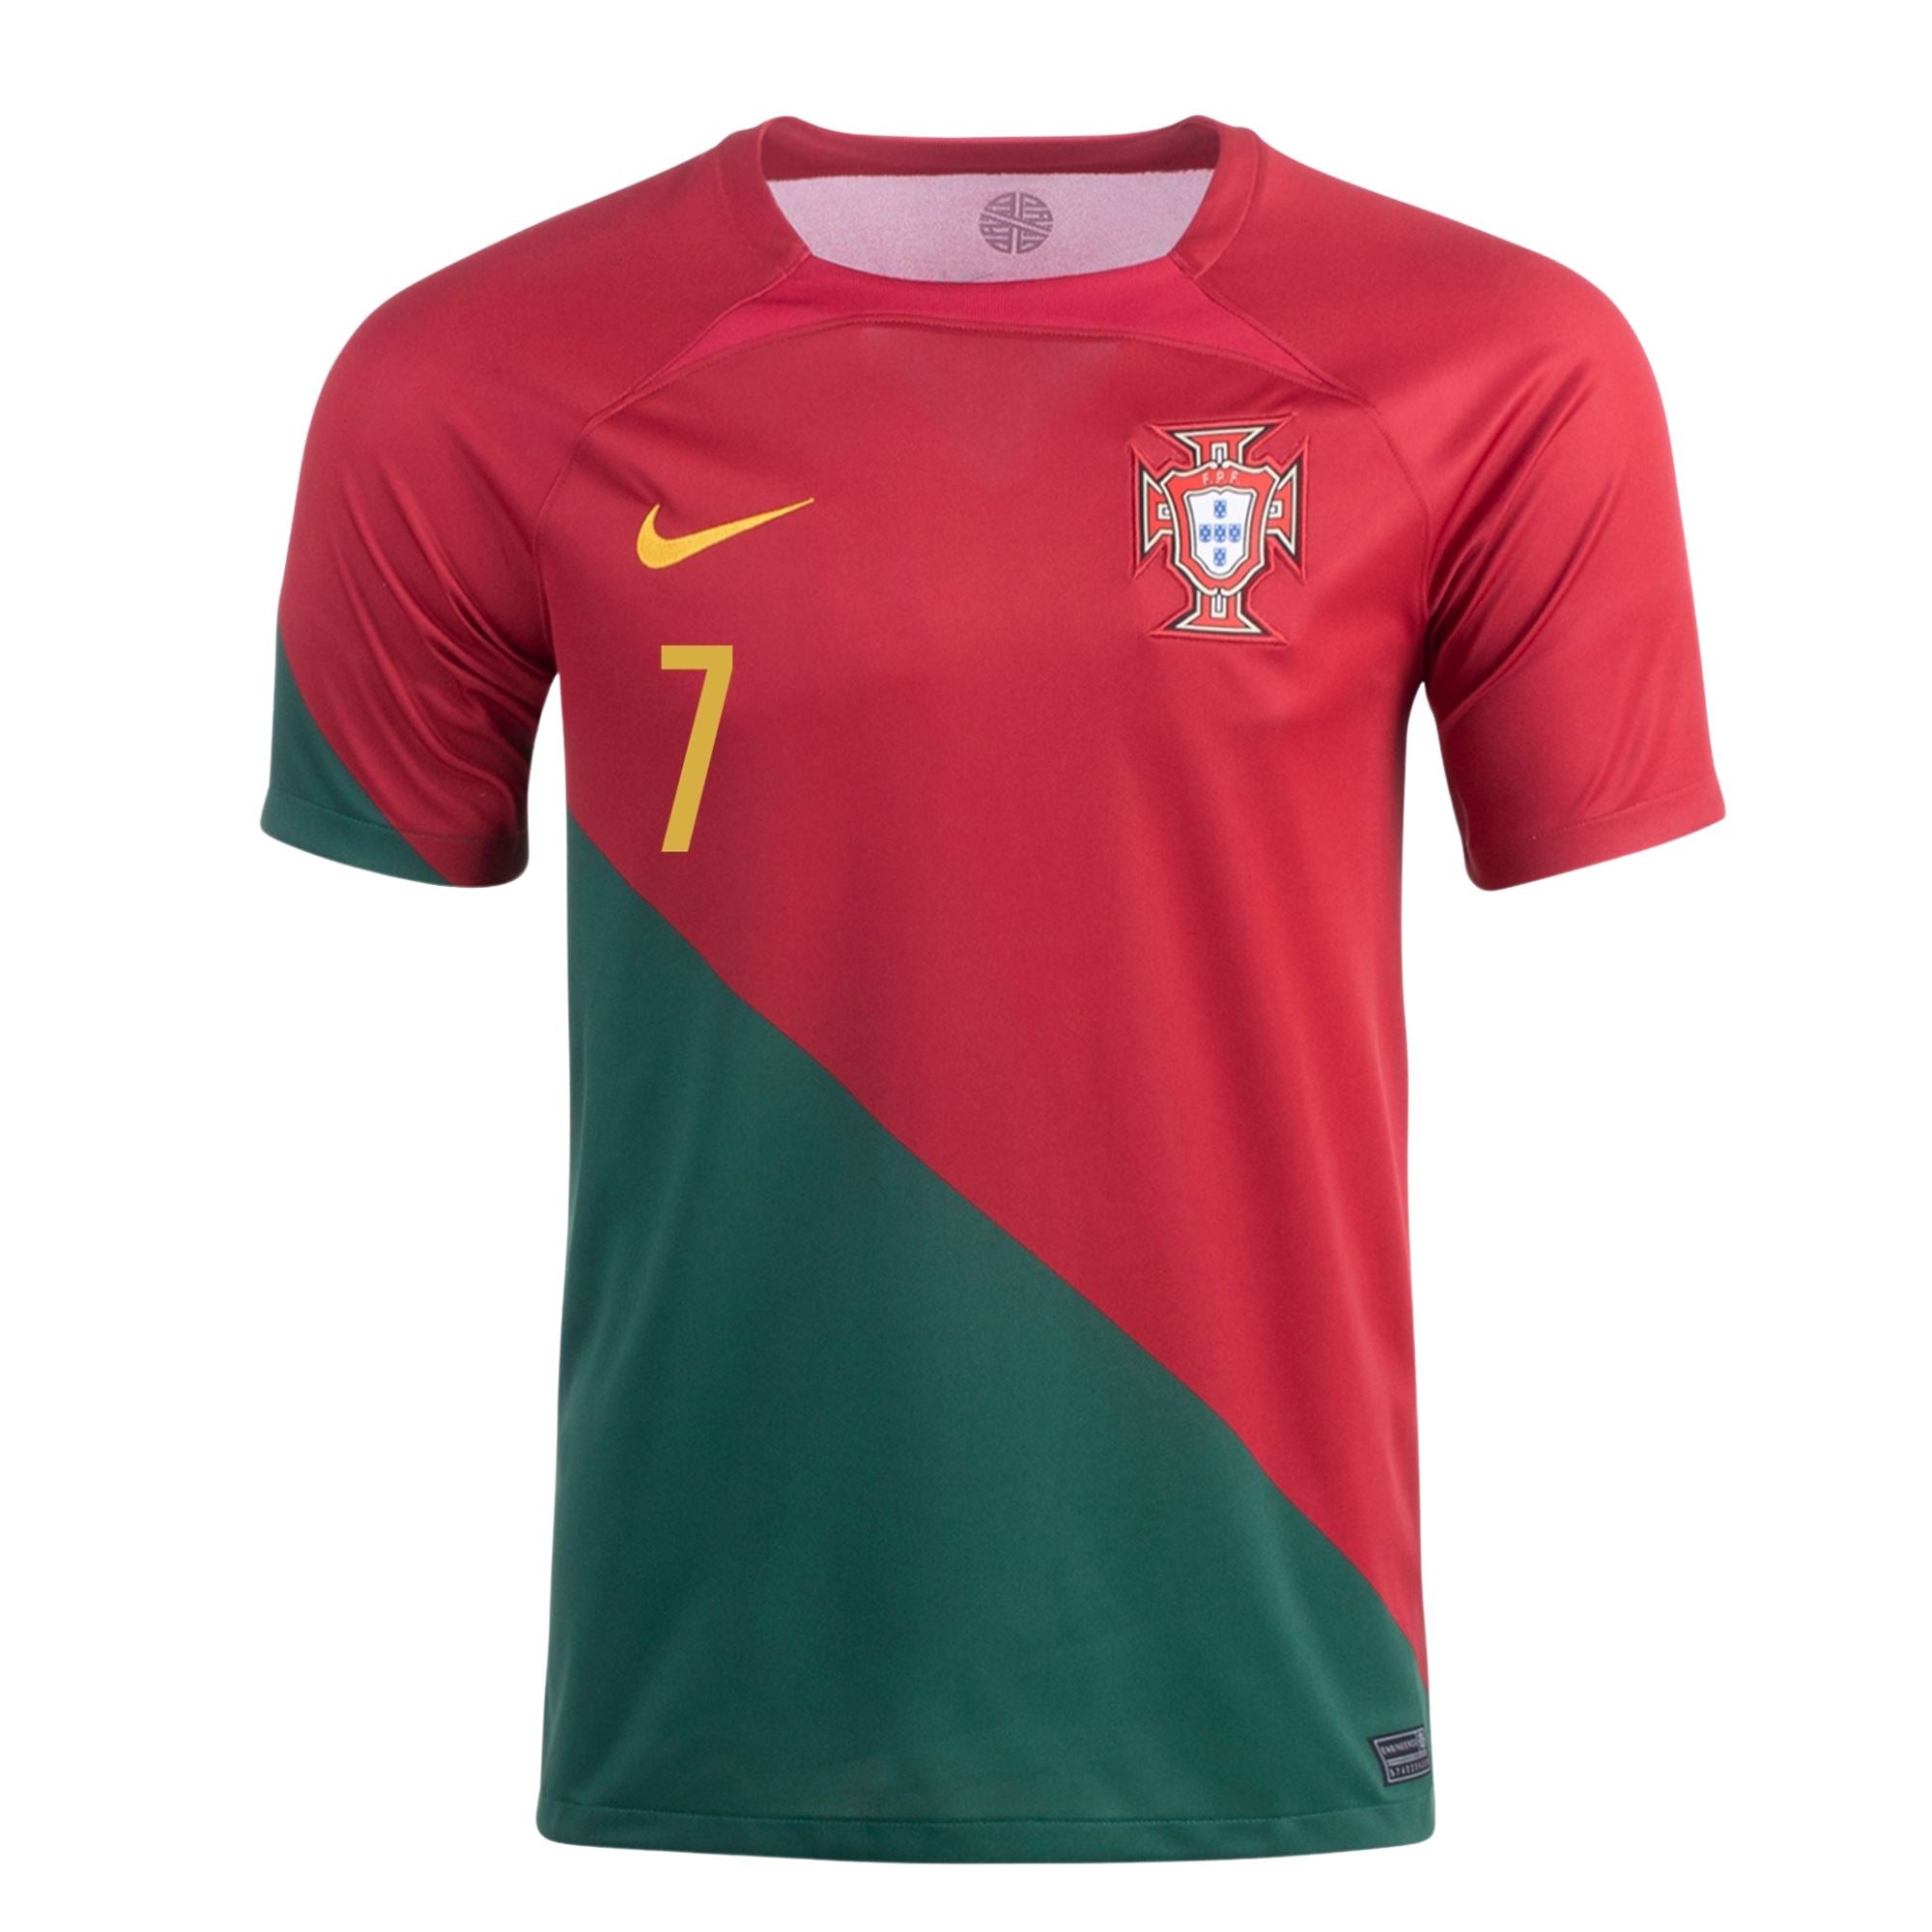 Casmyd Brazil Ney-MARR #10 Soccer Jersey Kit for Kids | Breathable Team  Sports Shirt Set with Shorts & Socks